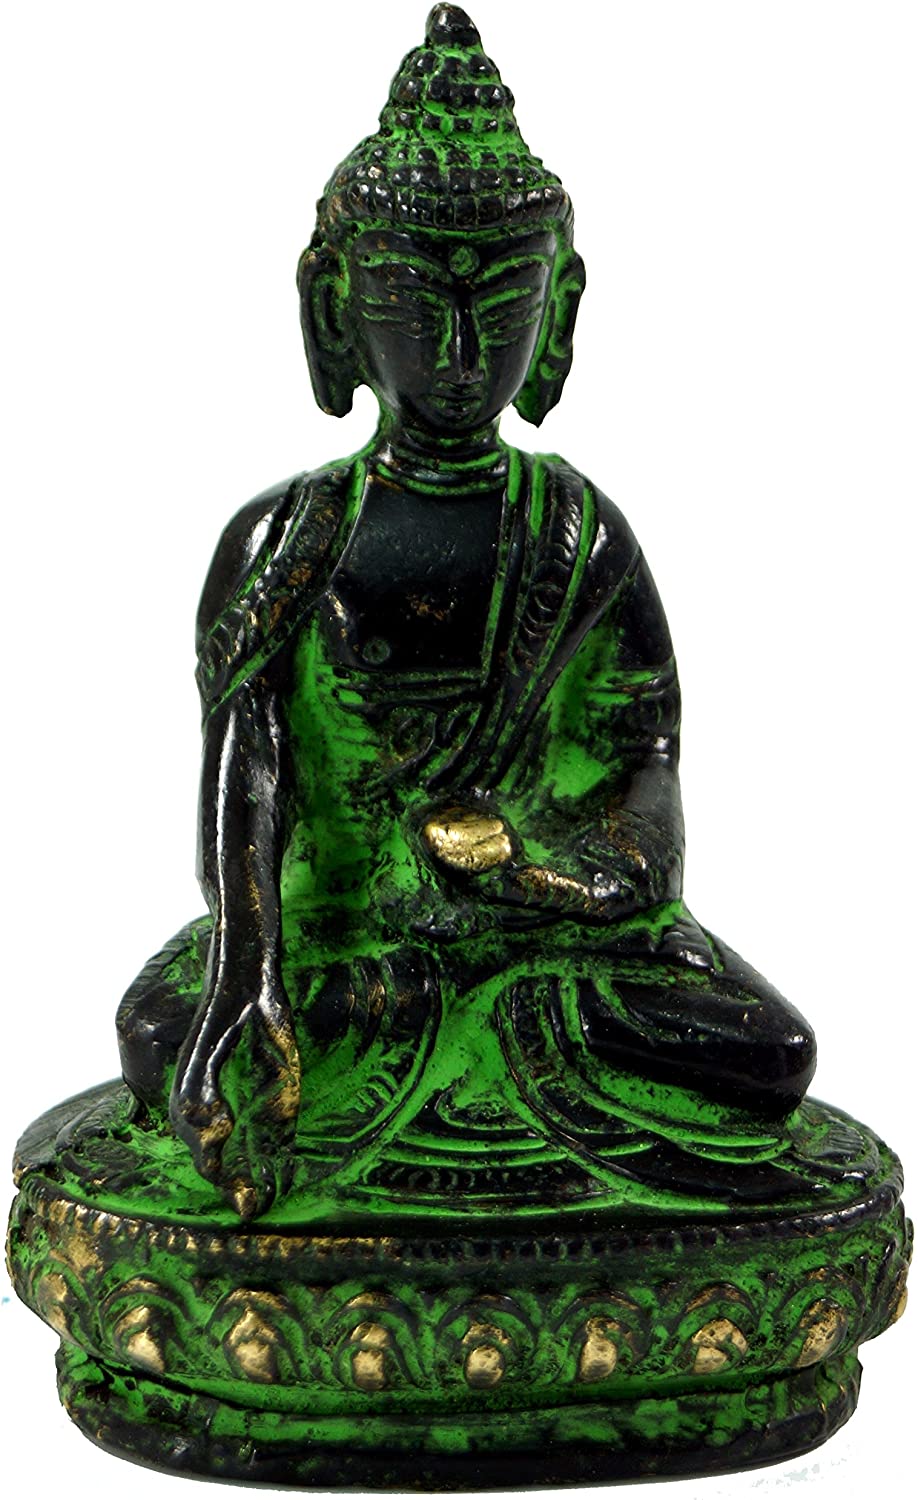 Guru-Shop GURU SHOP Buddha Statue Brass Bhumisparsa Mudra 10 cm - Model 1, Green Buddhas